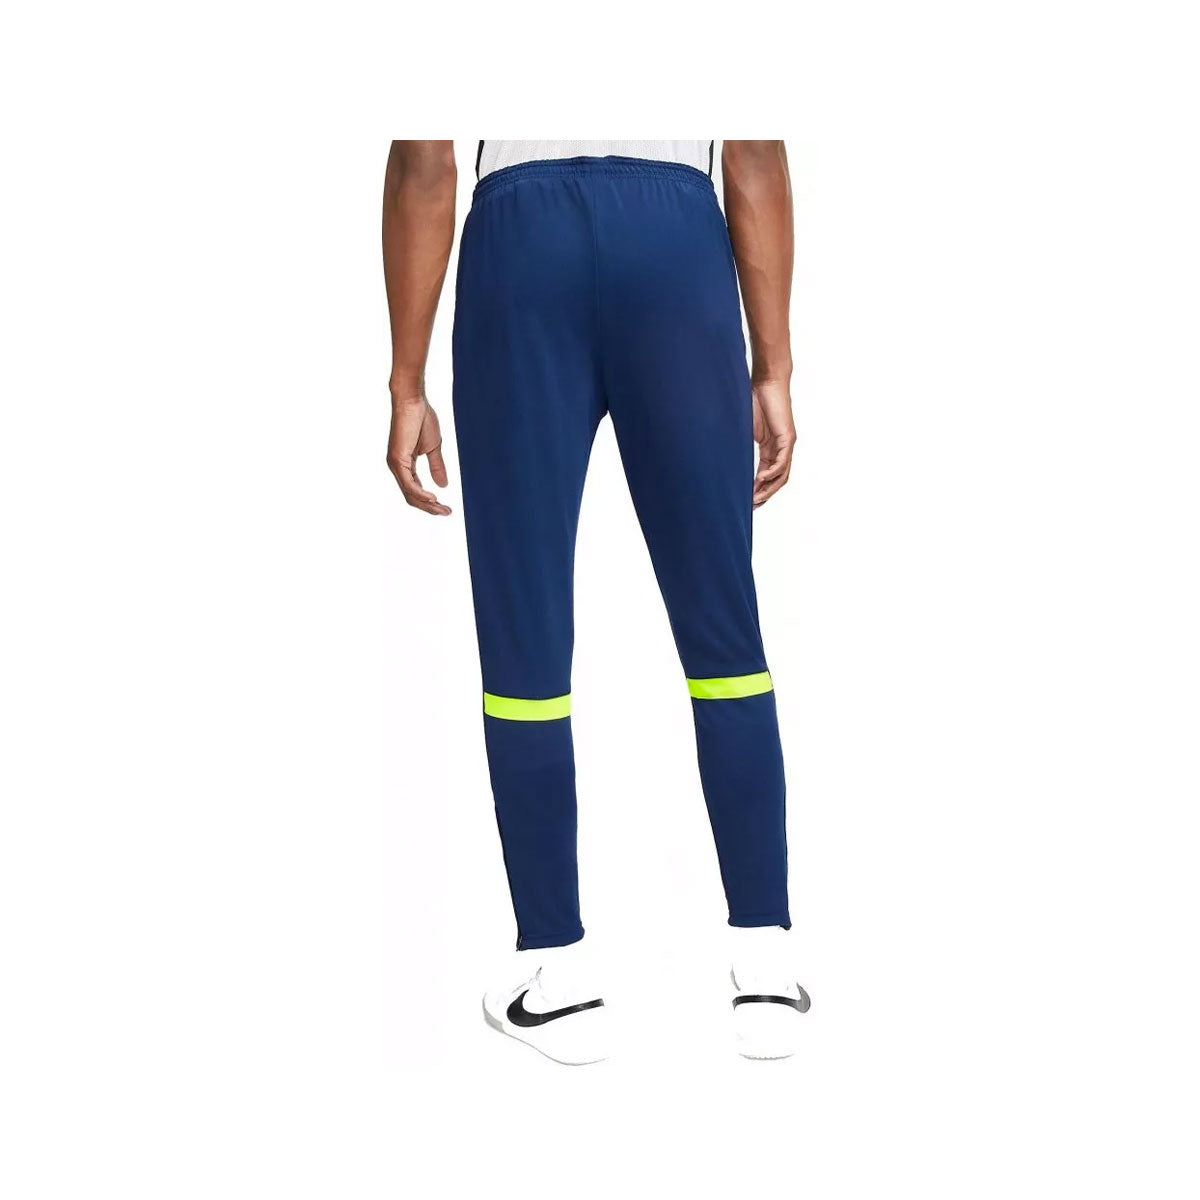 Nike Men's Dri-fit Academy Navy Sweatpants